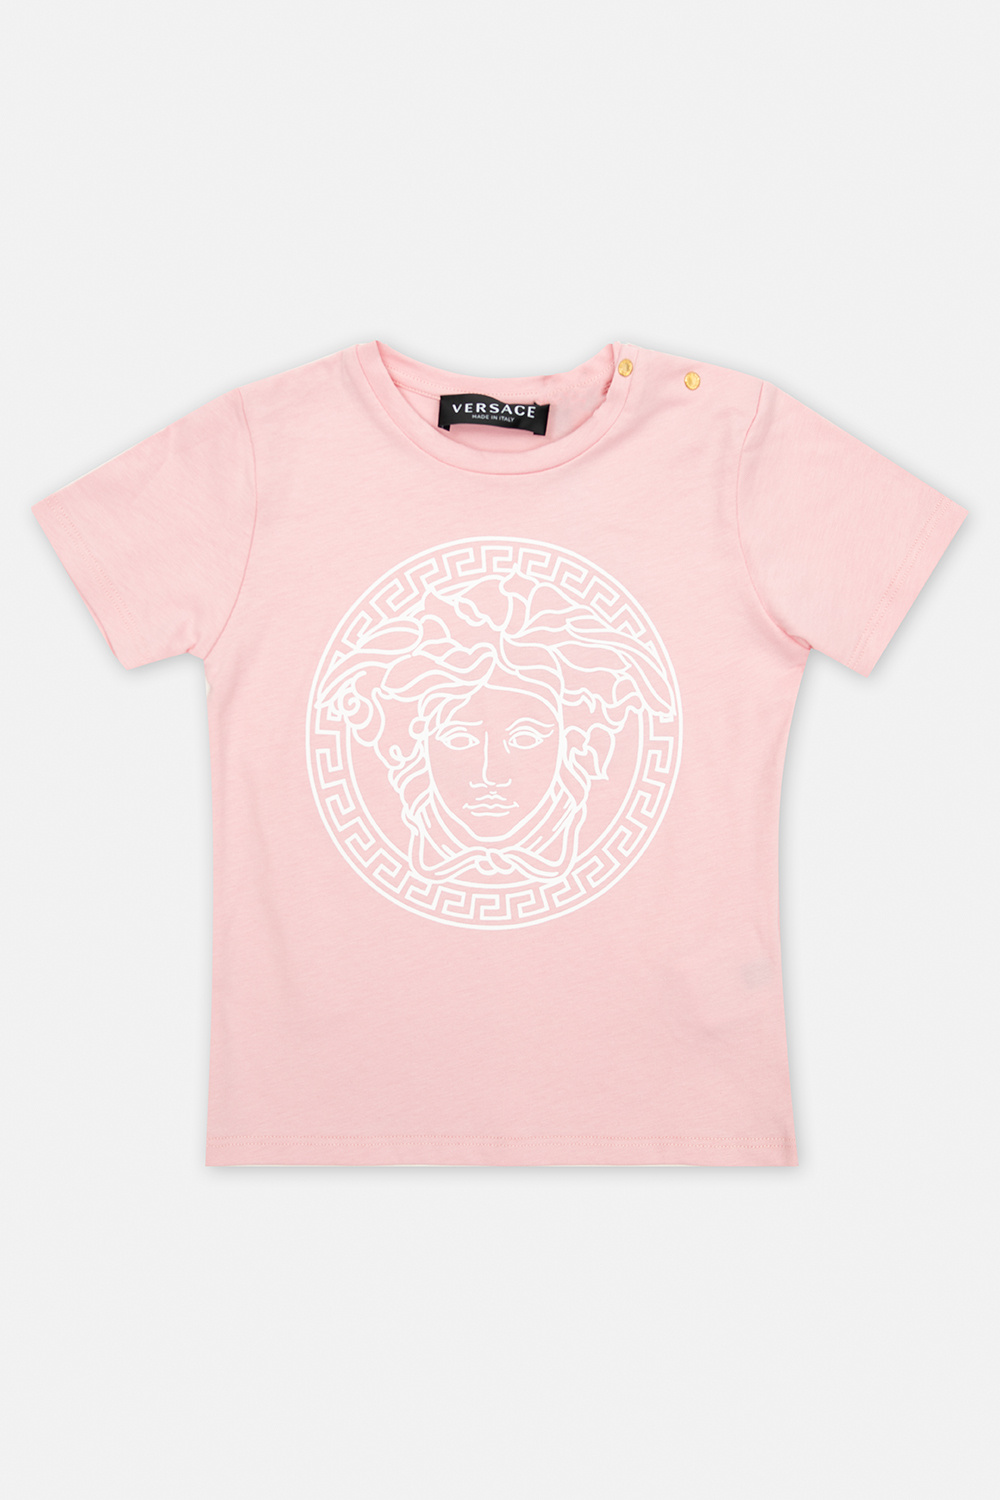 Versace Kids T-shirt classic with Medusa head